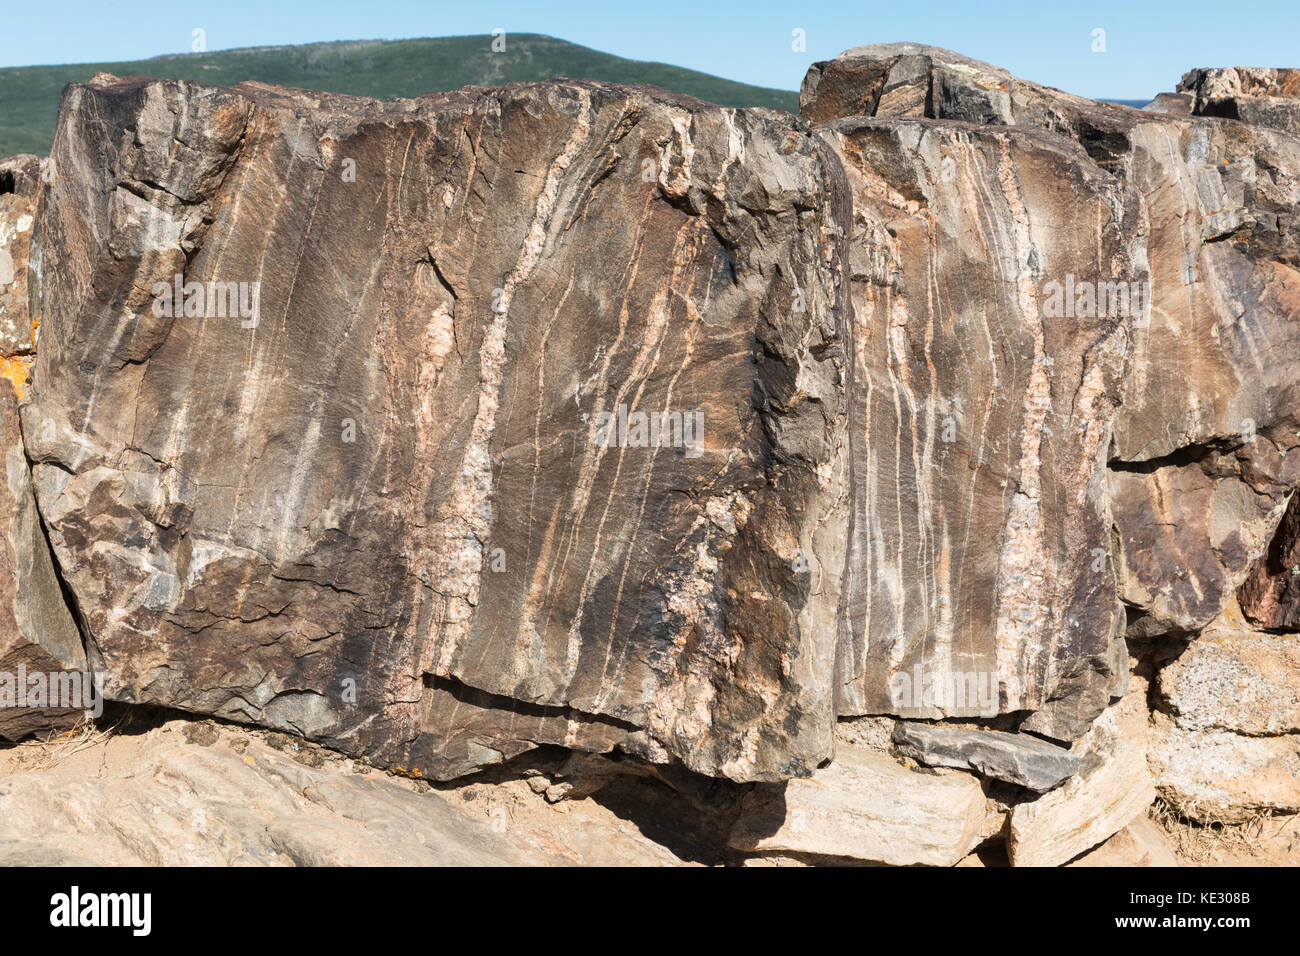 Pegmatite (lighter color) running through Precambrian gneiss and schist, Black Canyon of the Gunnison National Park, Colorado, USA Stock Photo